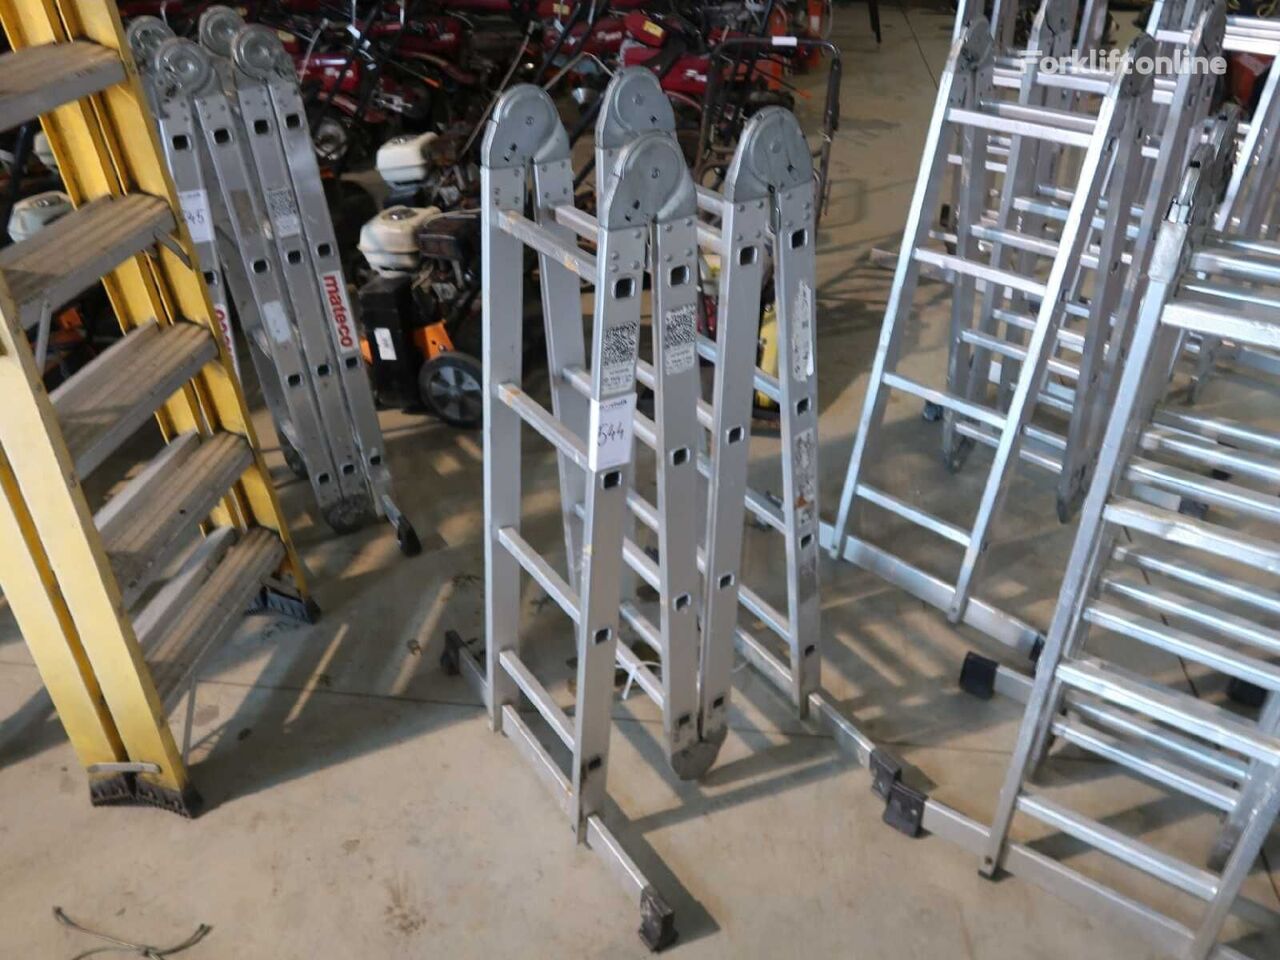 Lady - Plus 16 - Multi position ladder - 2018 warehouse ladder